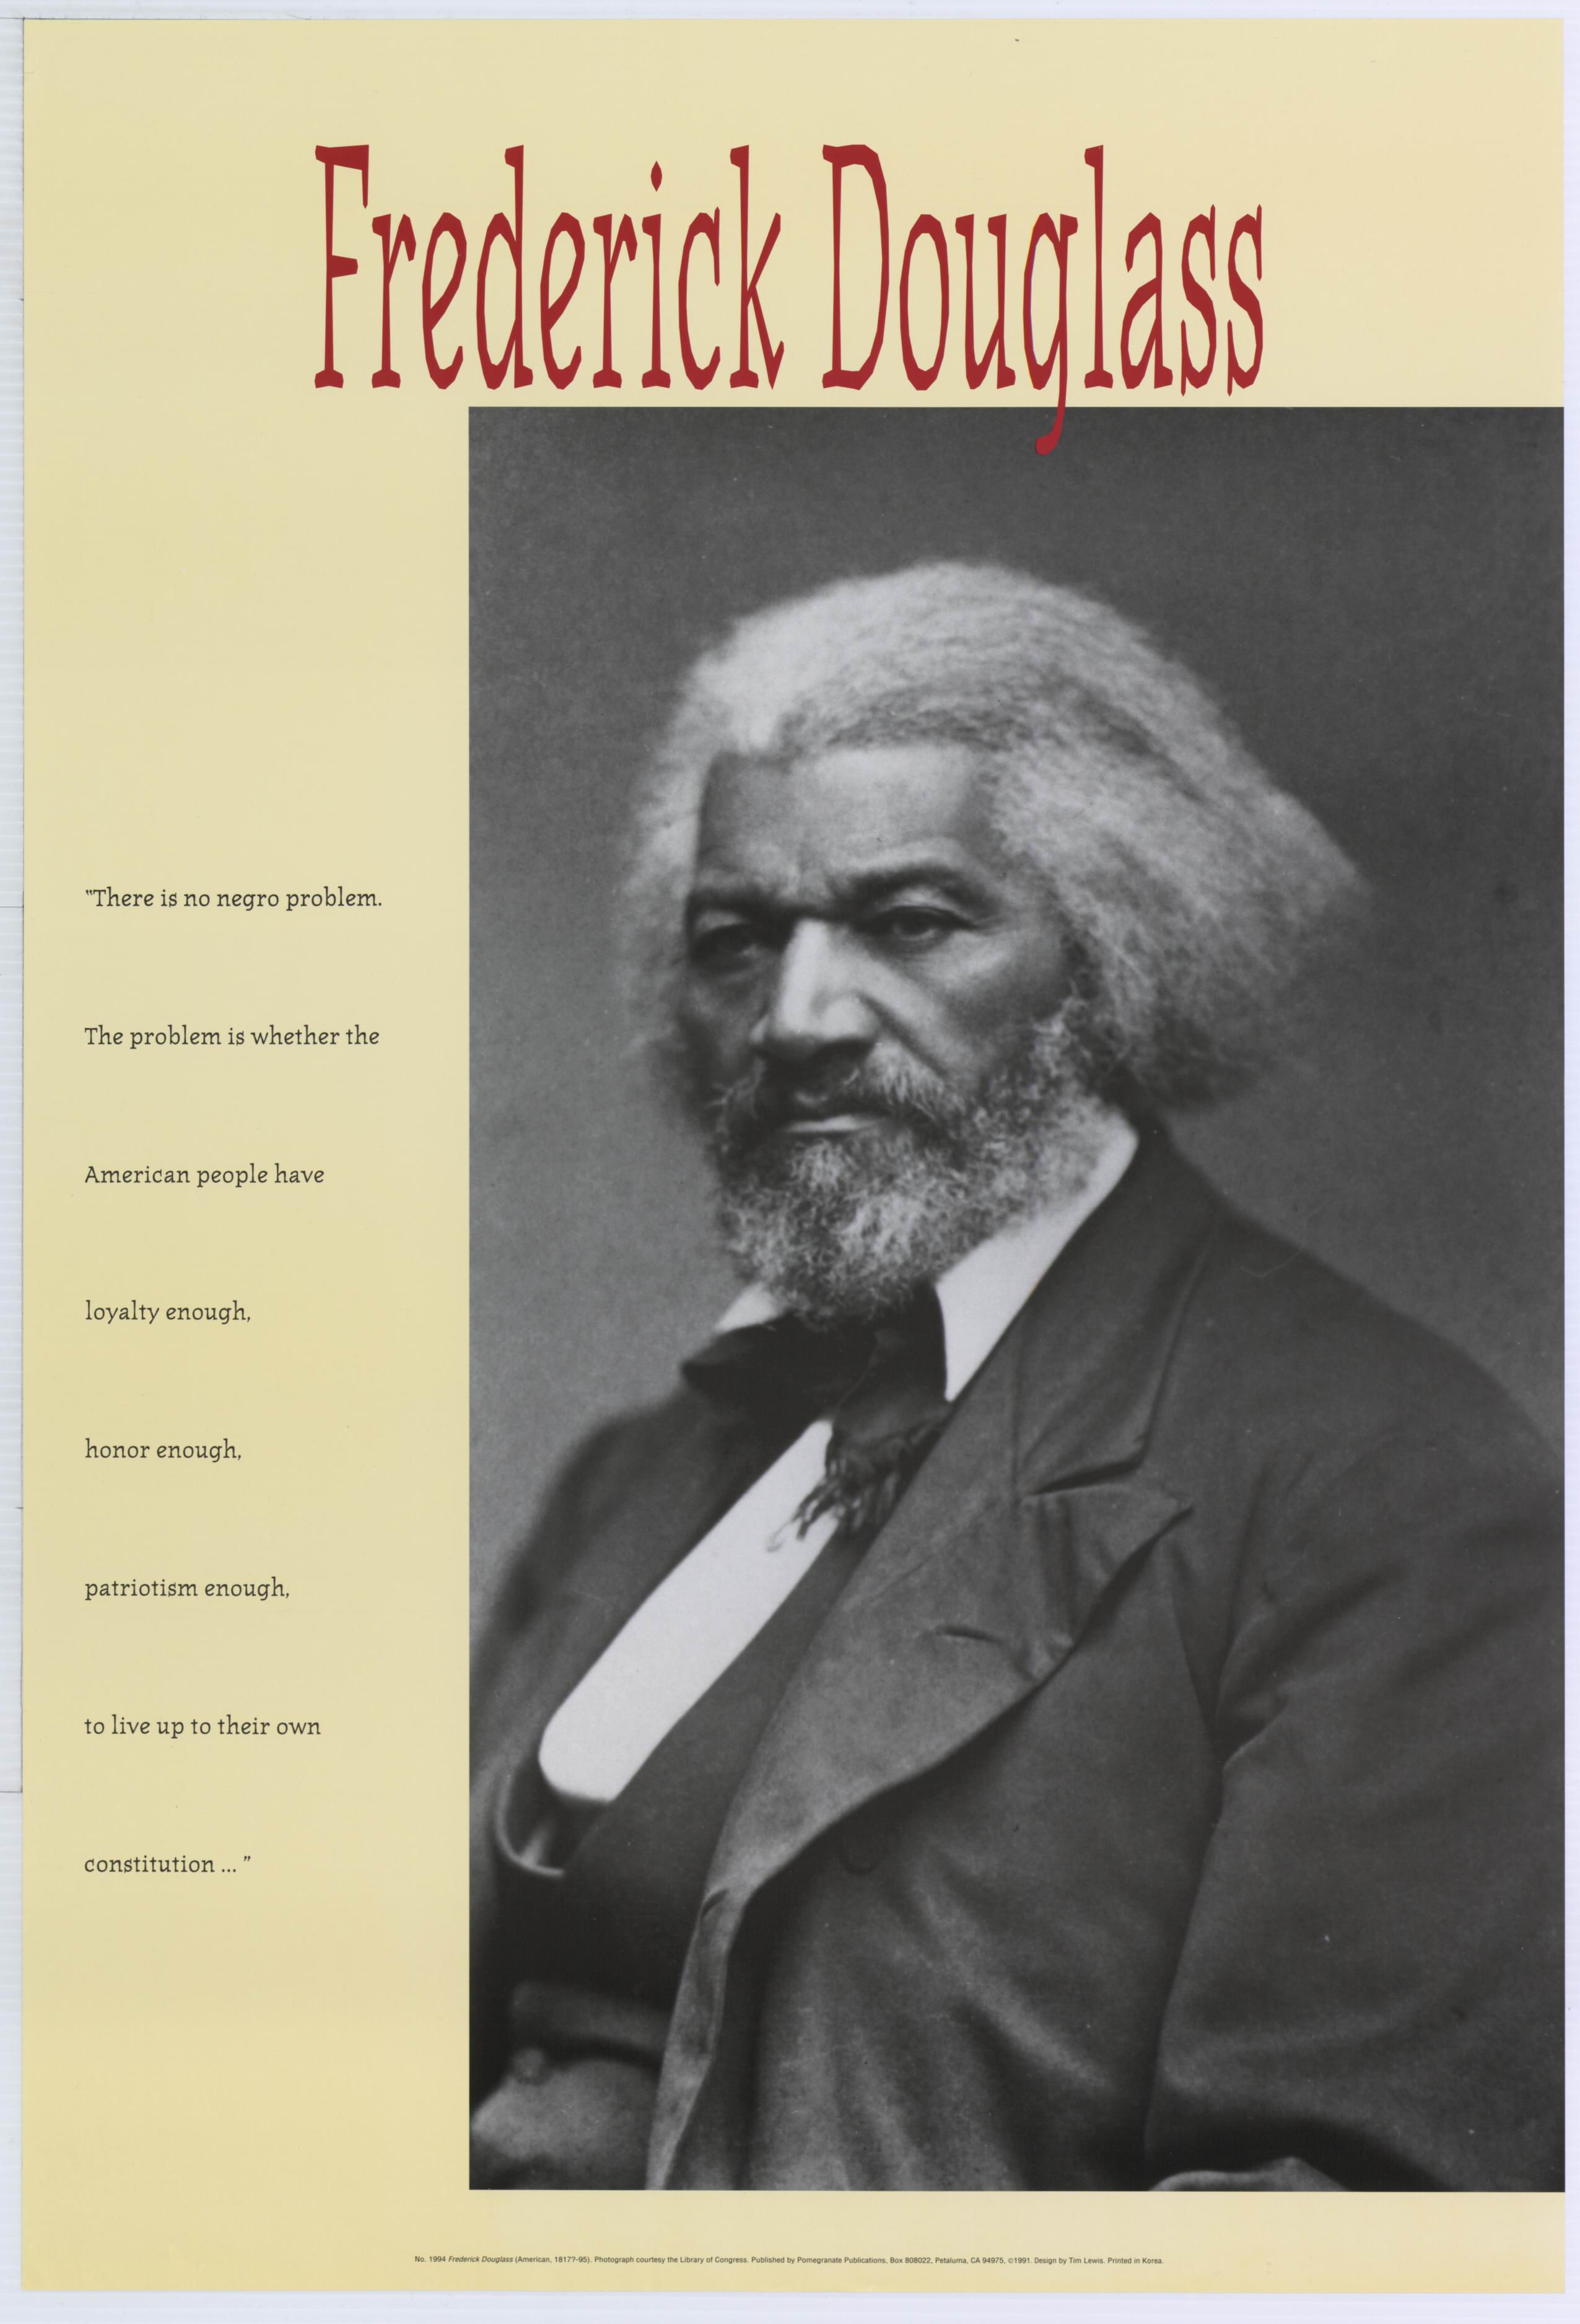 poster, Frederick Douglass